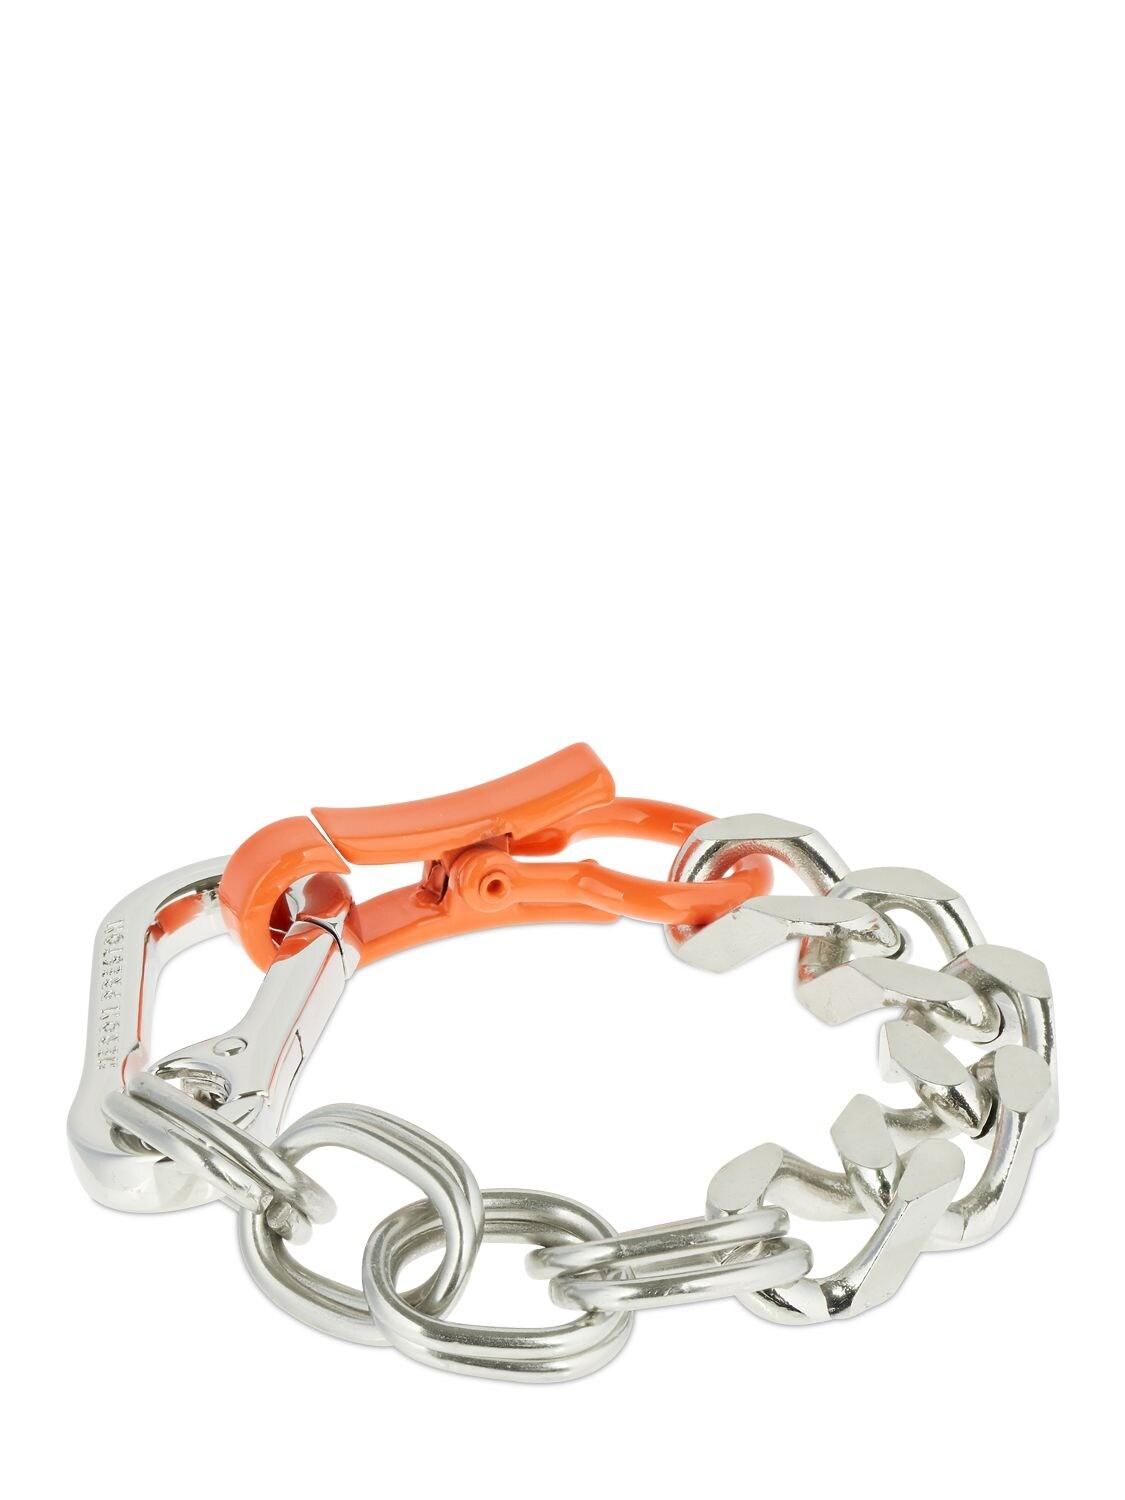 Heron Preston Multichain Bracelet W/ Orange Closure for Men - Lyst